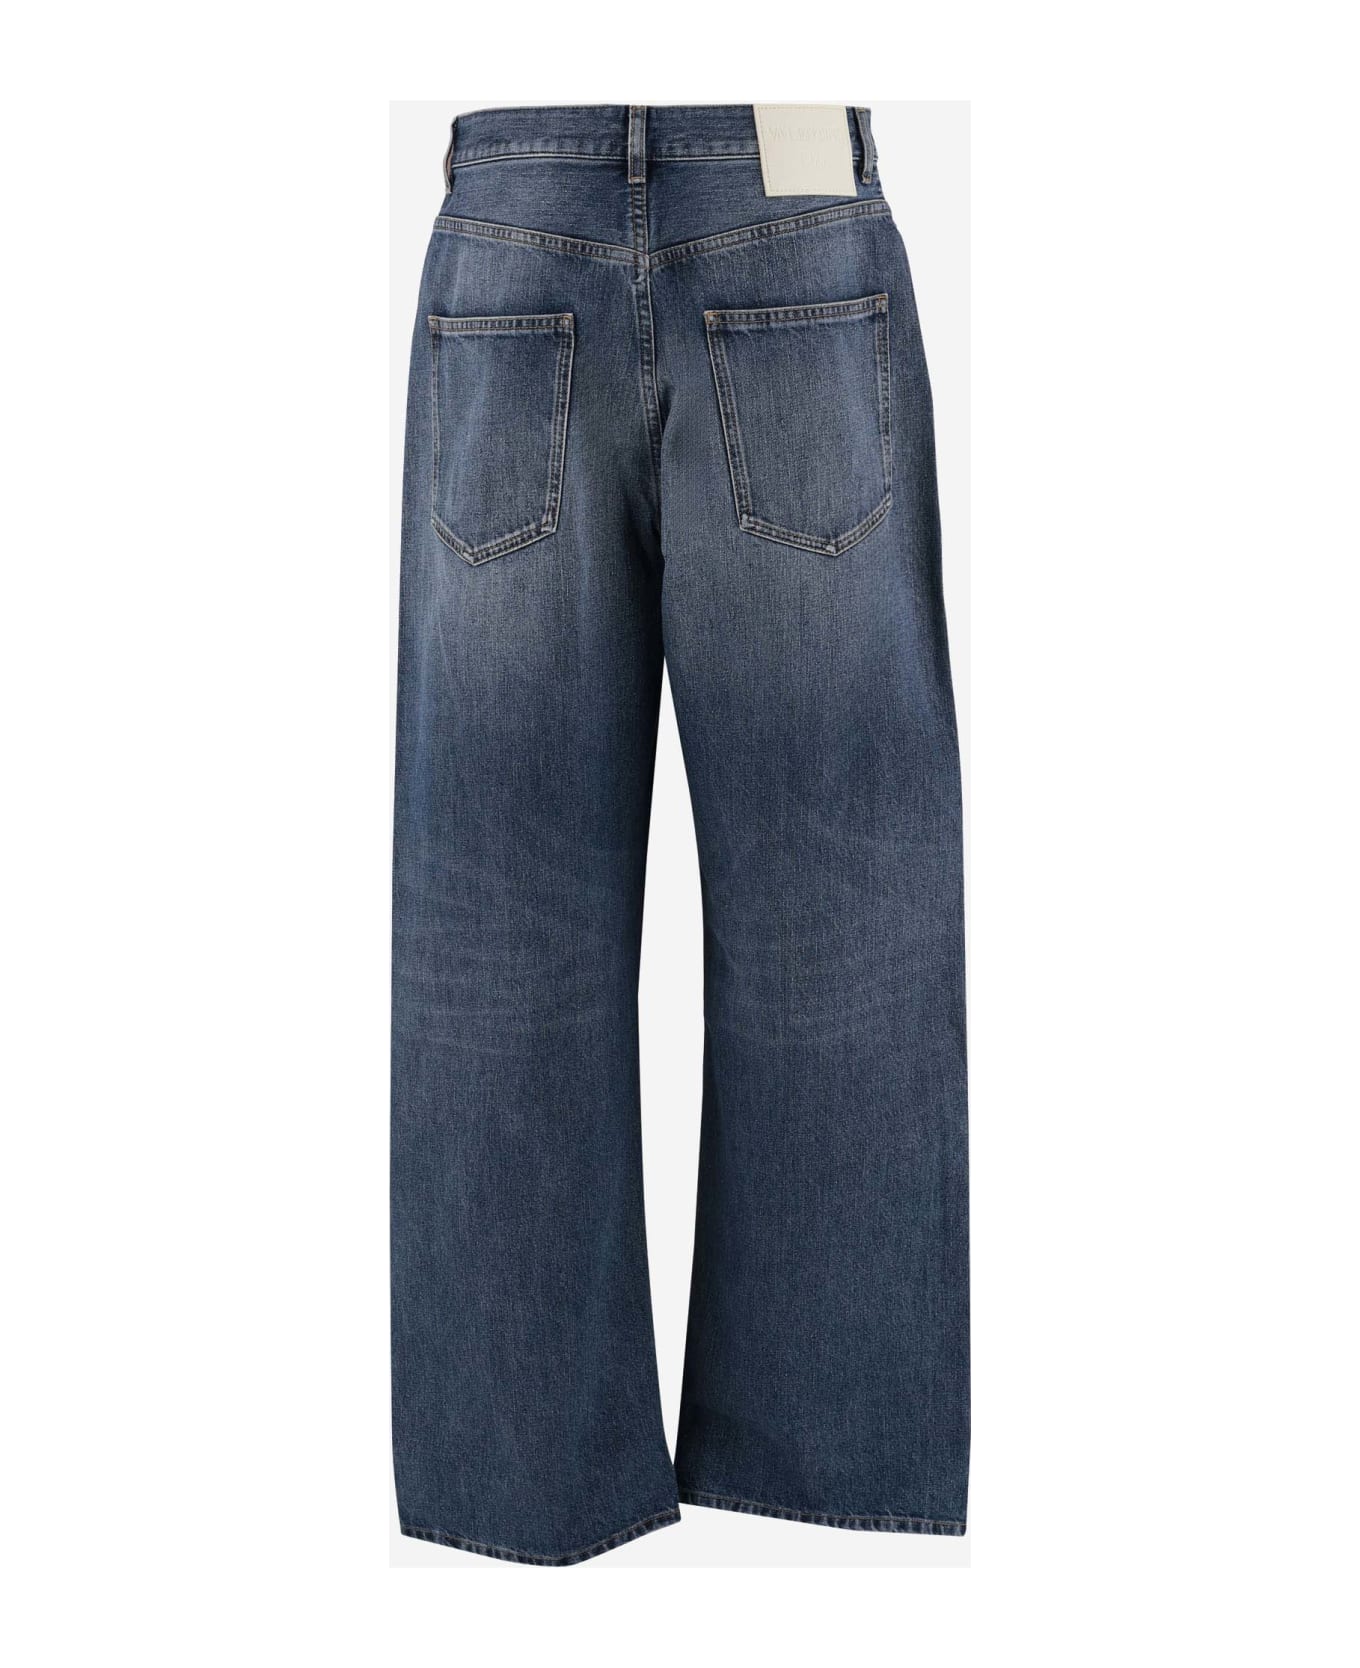 Valentino Cotton Denim Jeans - Medium blue